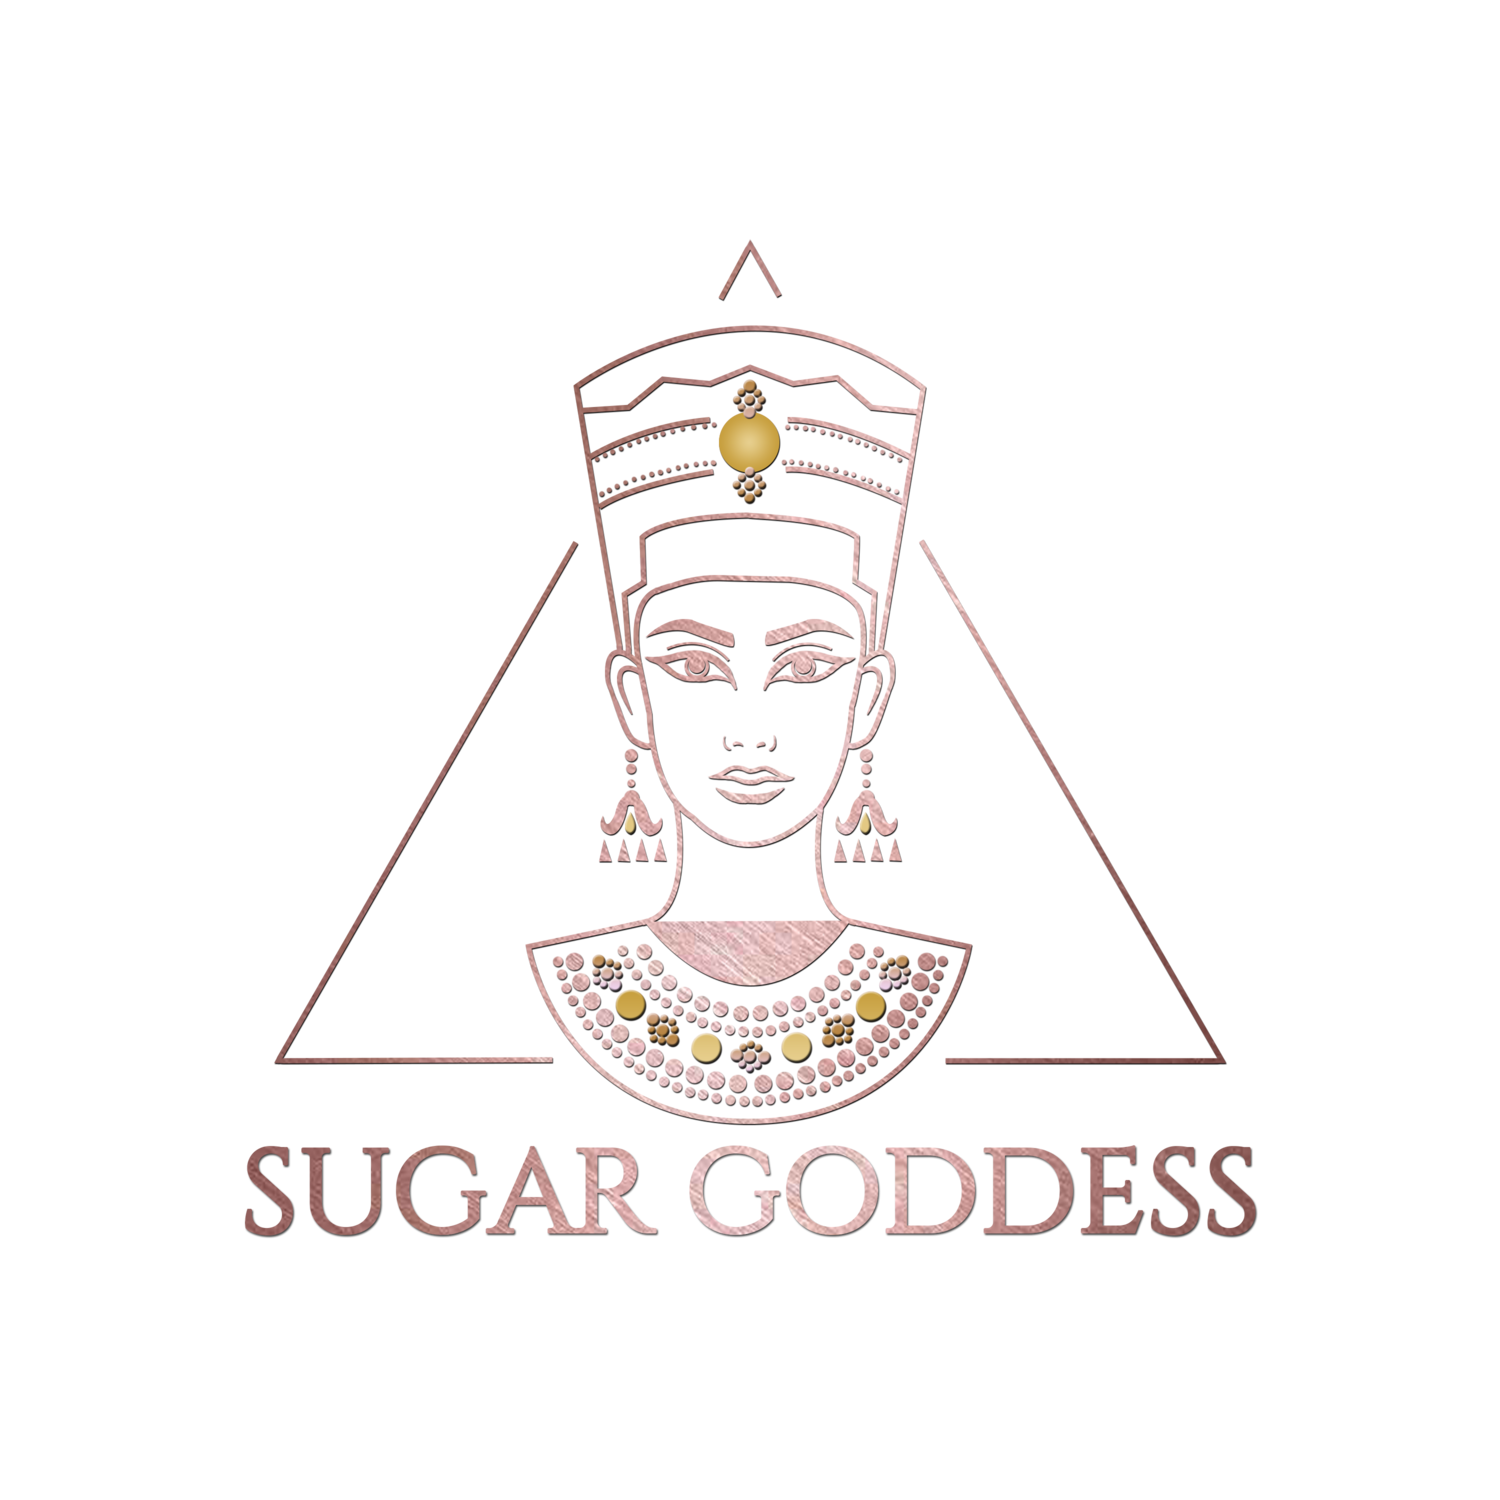 Sugar Goddess